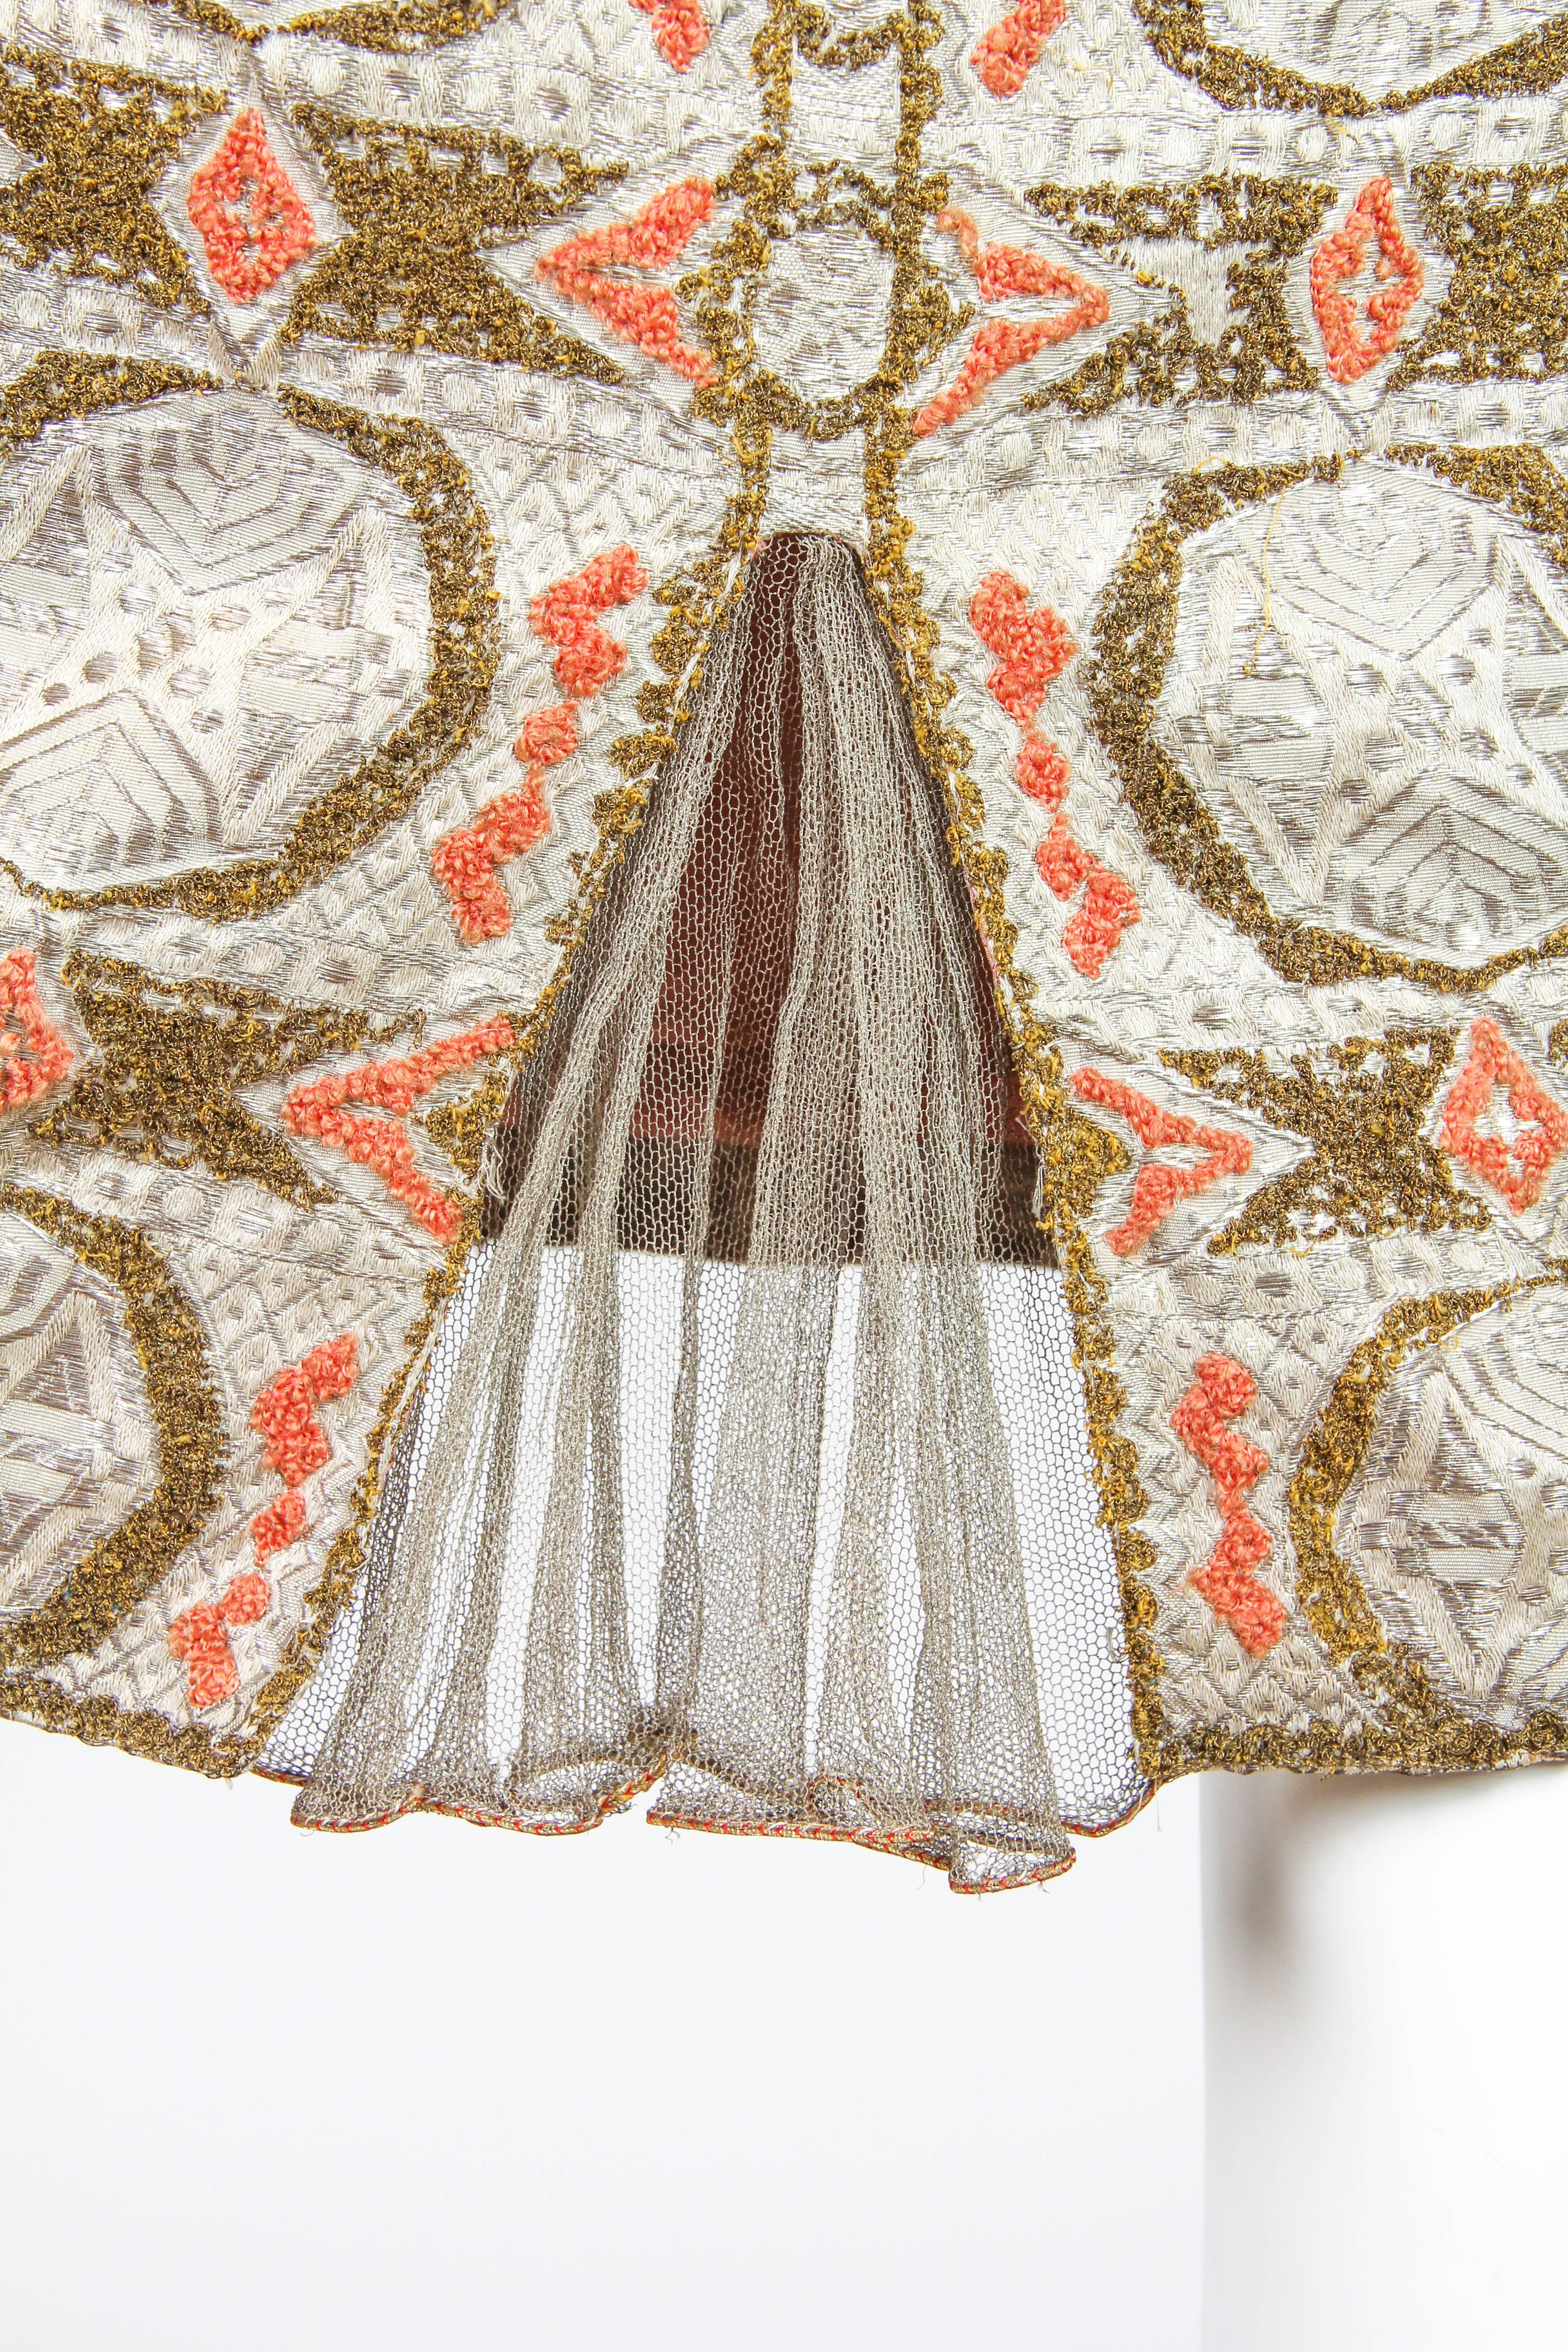 Embroidered 1920s Lamé Dress 1